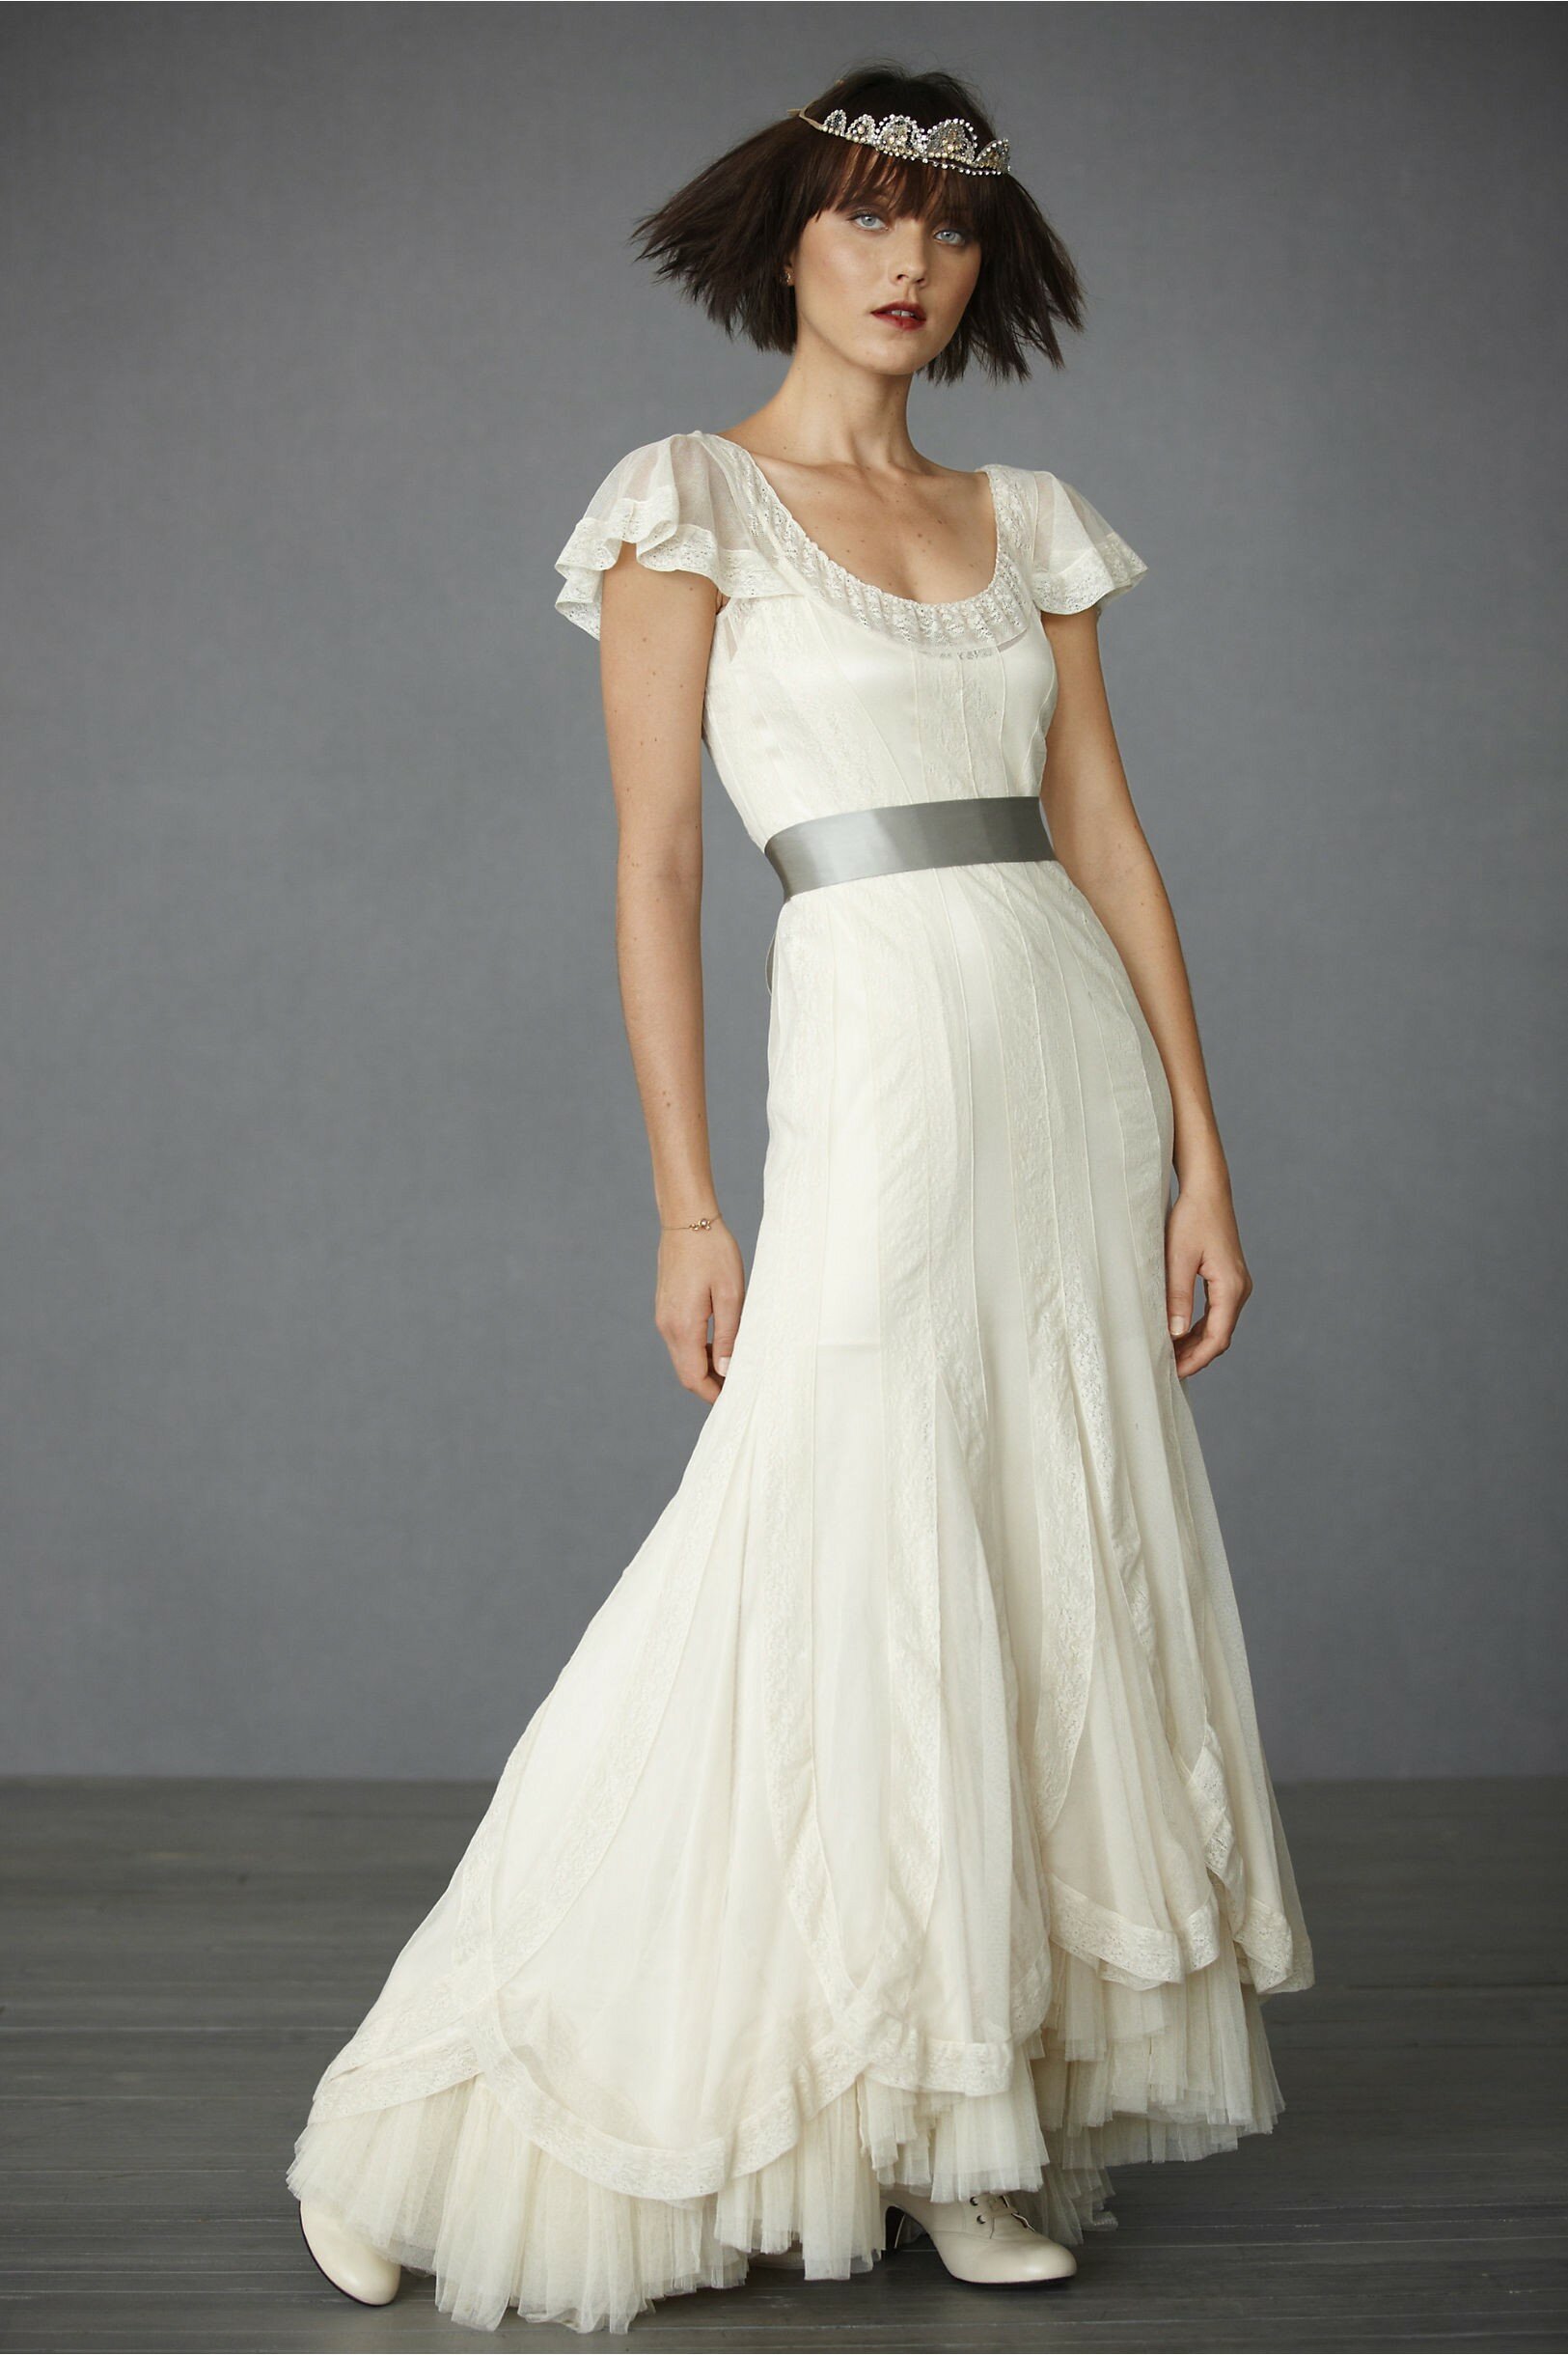 Cotton wedding dress Photo - 14